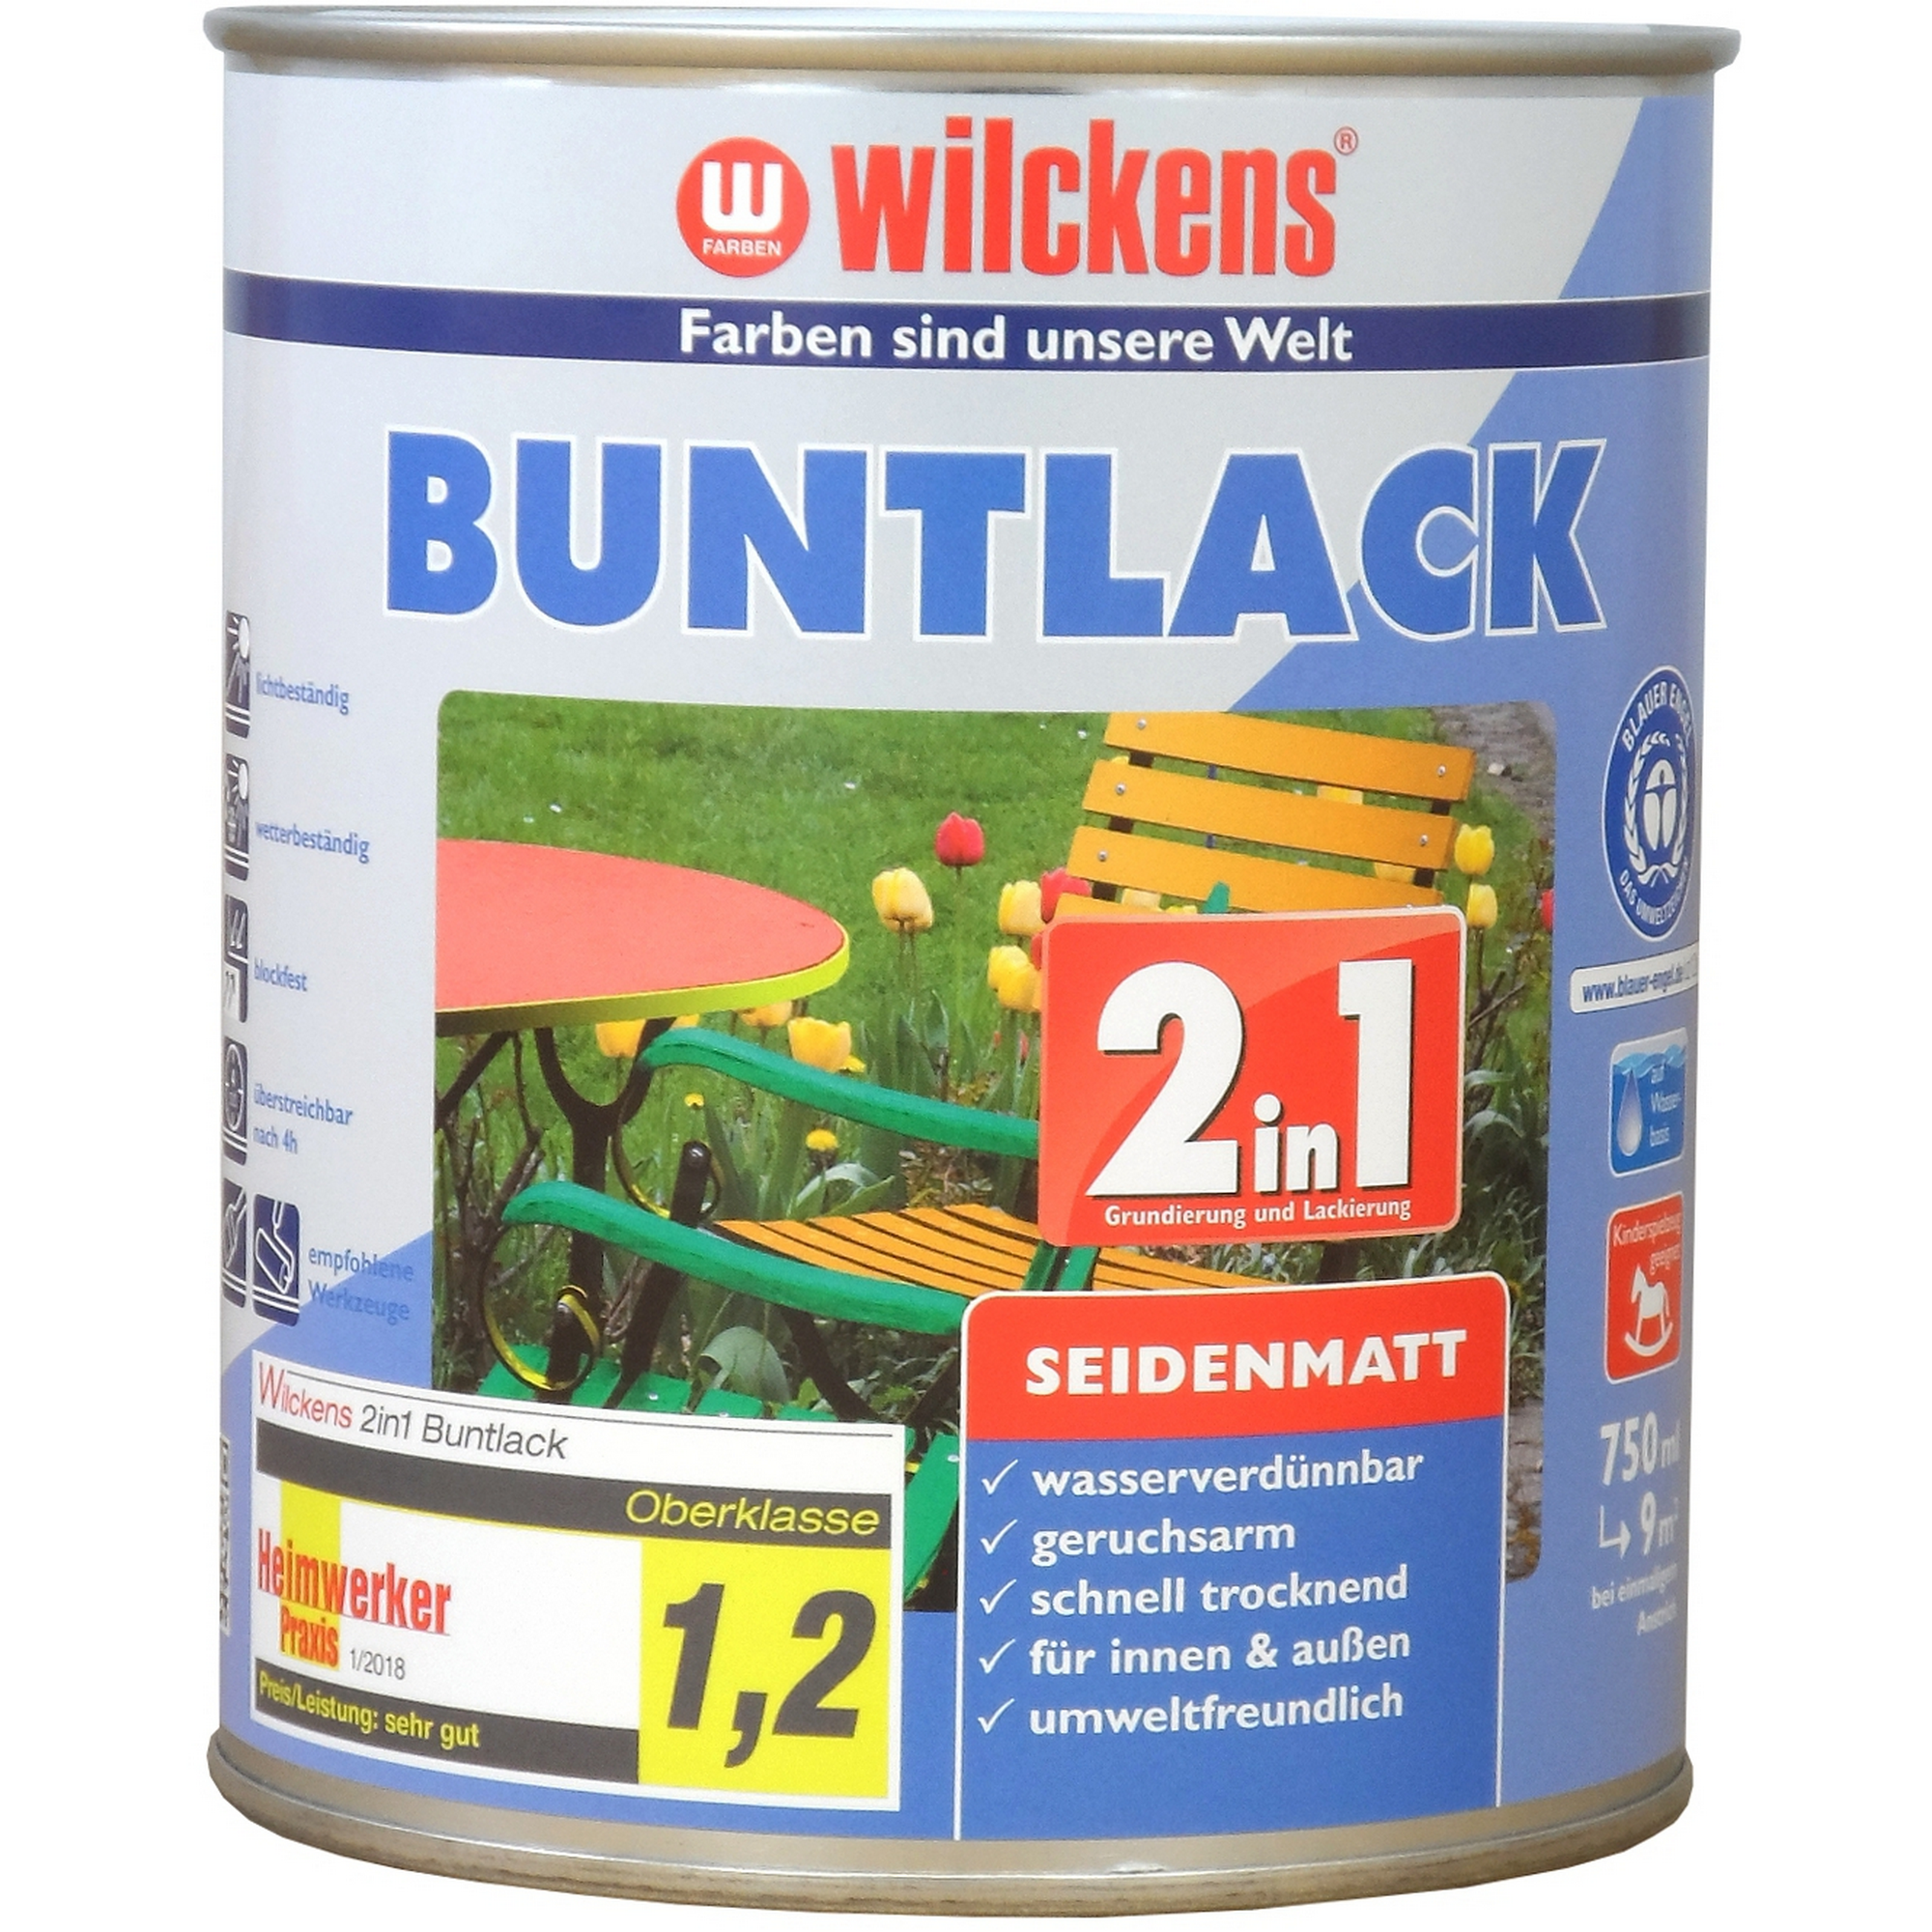 2in1 Buntlack moosgrün seidenmatt 750 ml + product picture